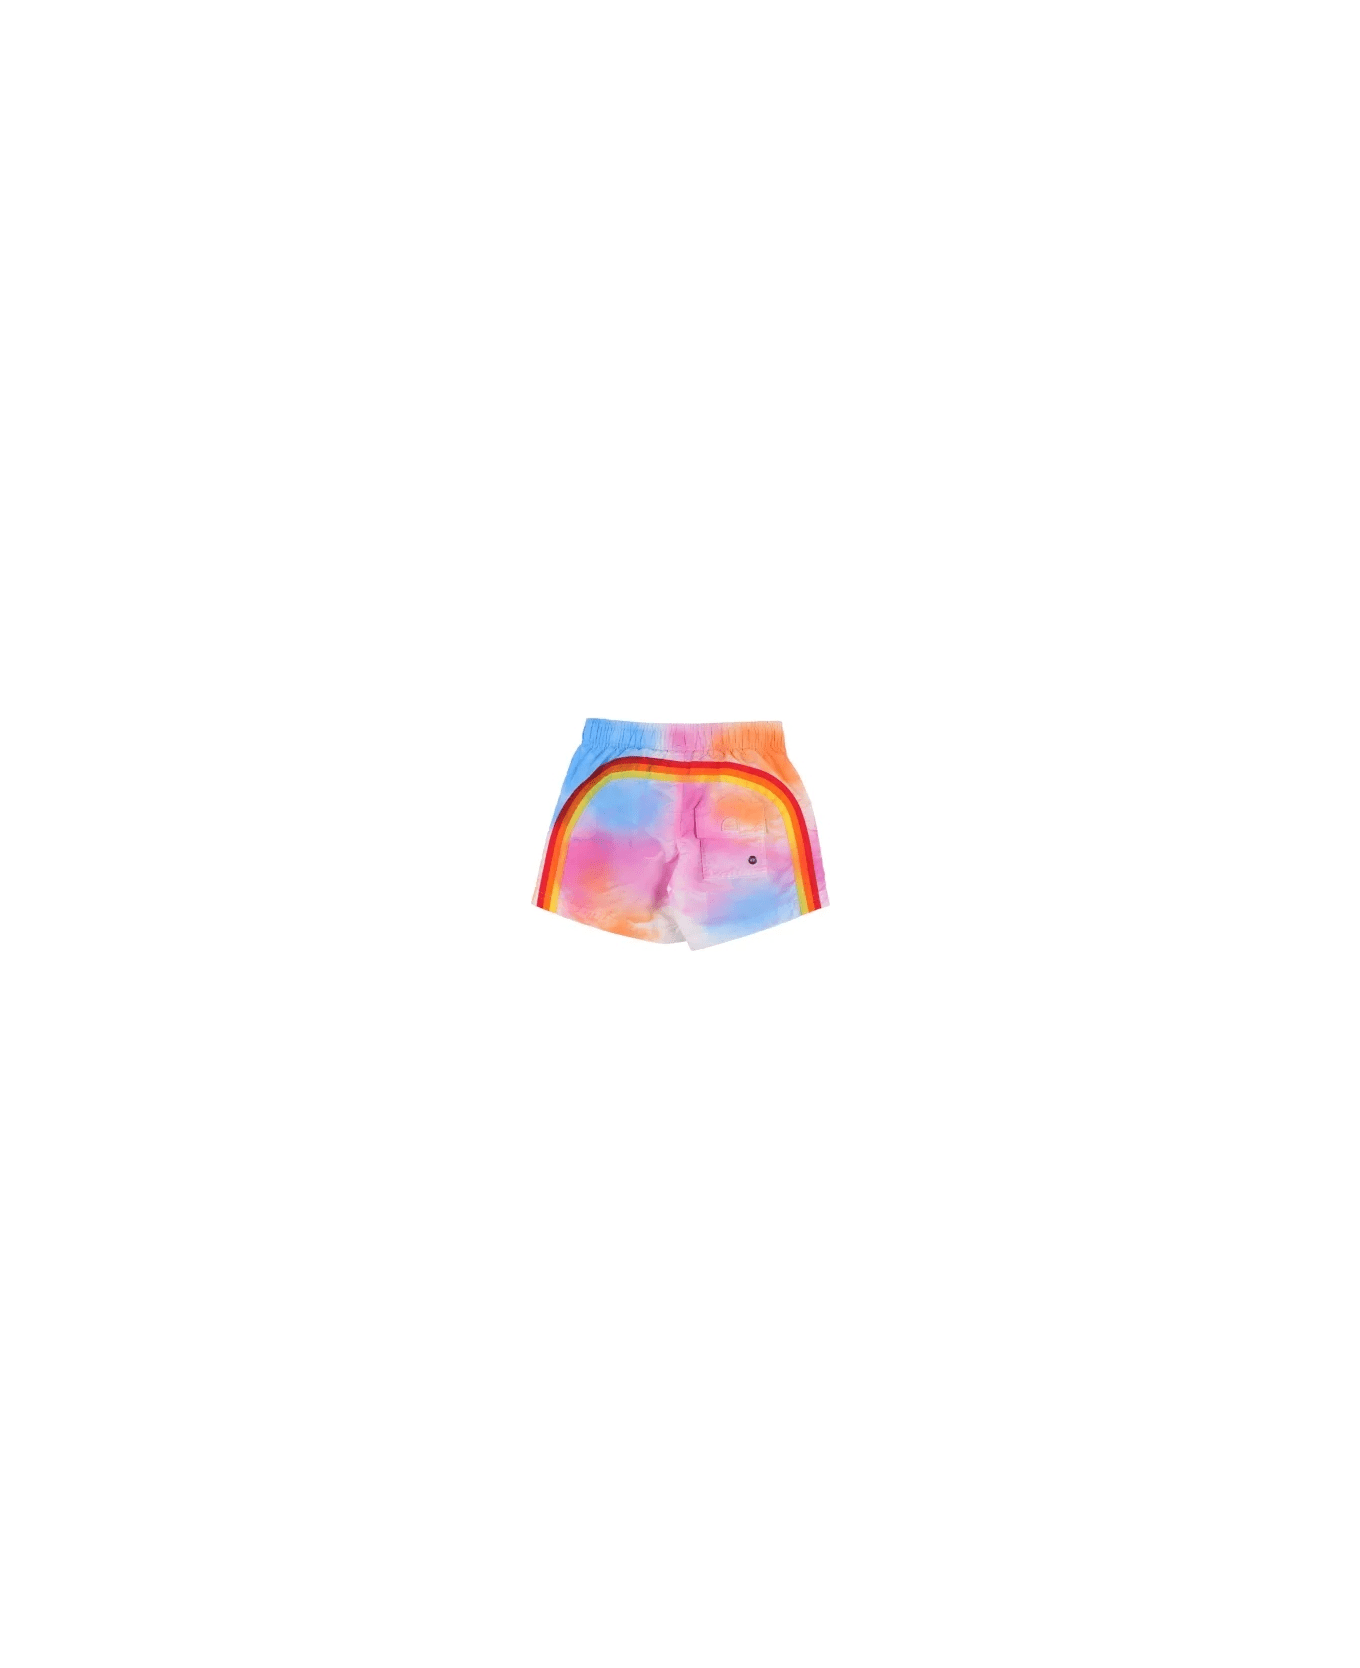 Sundek Swimsuit With Print - Multicolor